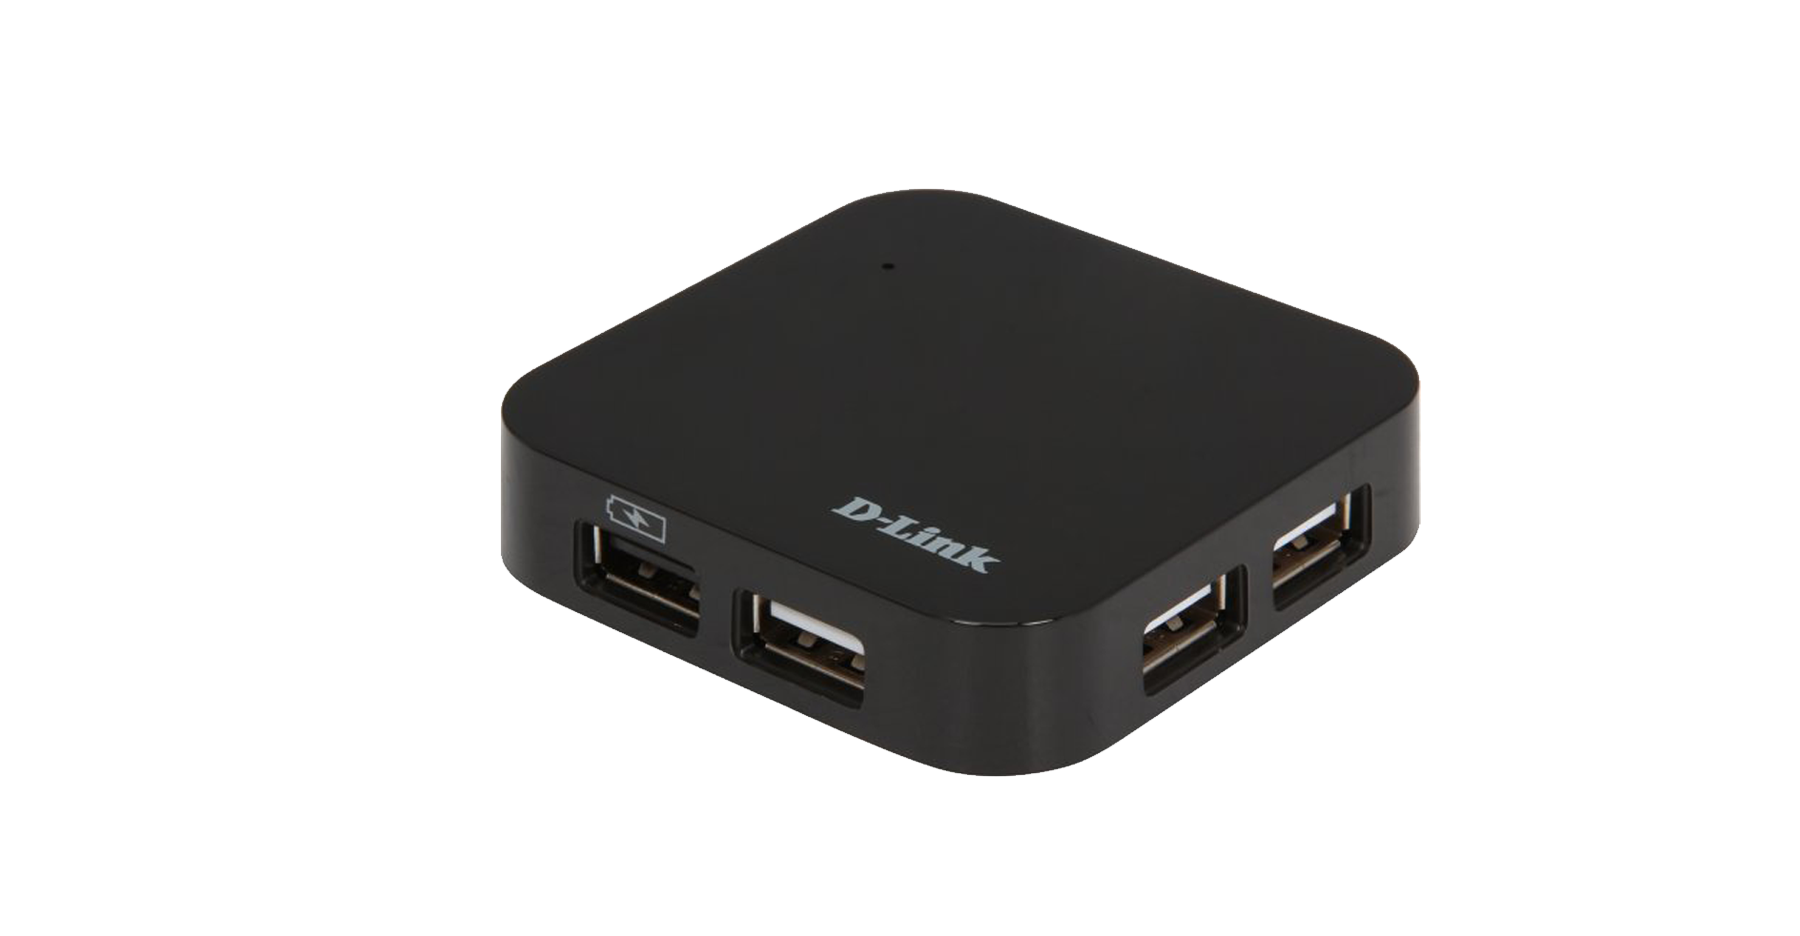 D-Link 4-Port USB 2.0 Hub including Fast Charging Port, mini USB 2.0 Port and 5V/2.5A Power Adapter